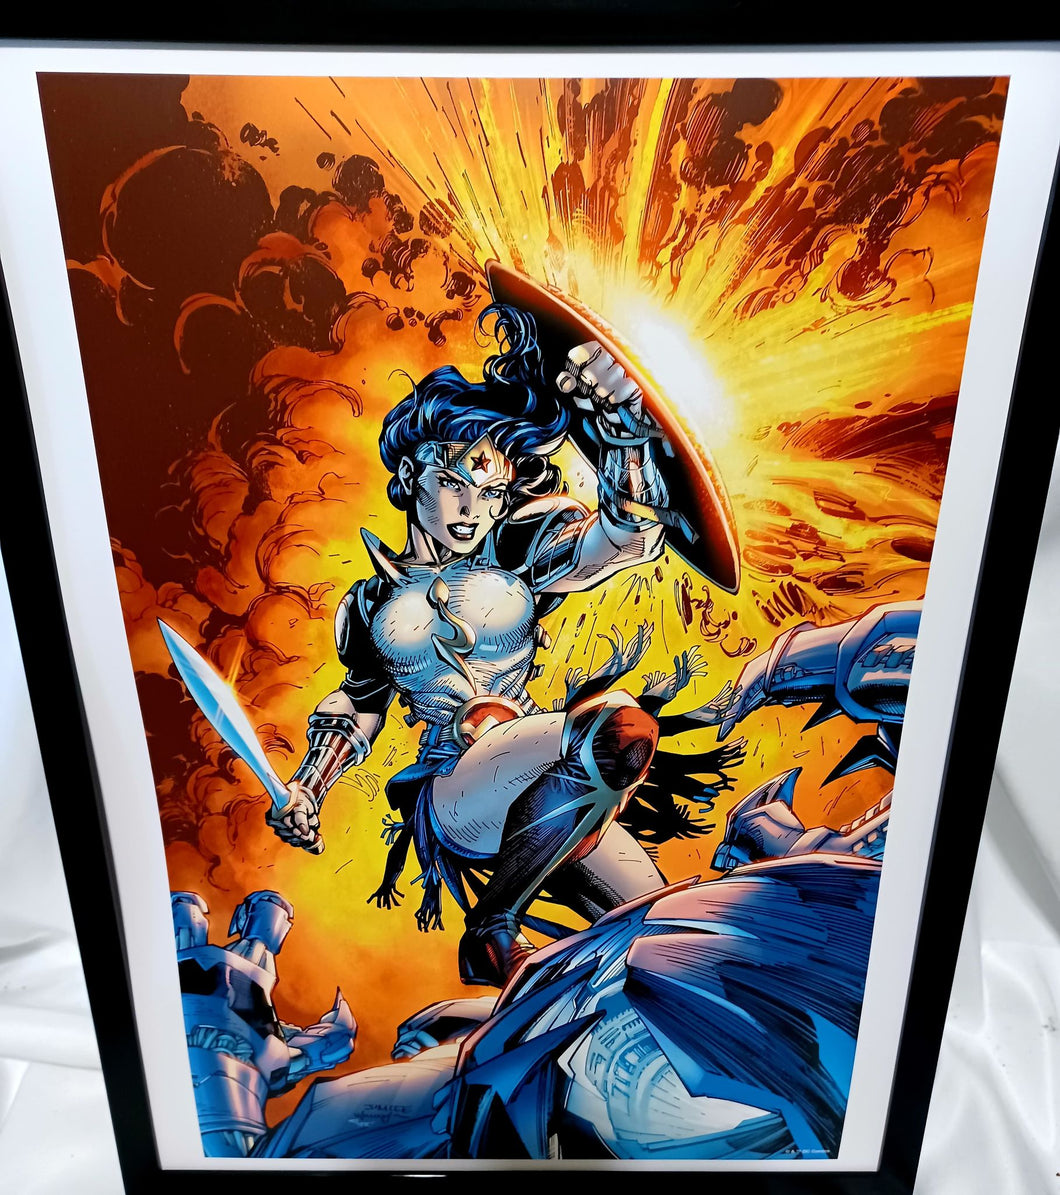 Wonder Woman Dark Nights Metal by Jim Lee FRAMED 12x16 Art Print DC Comics Poster